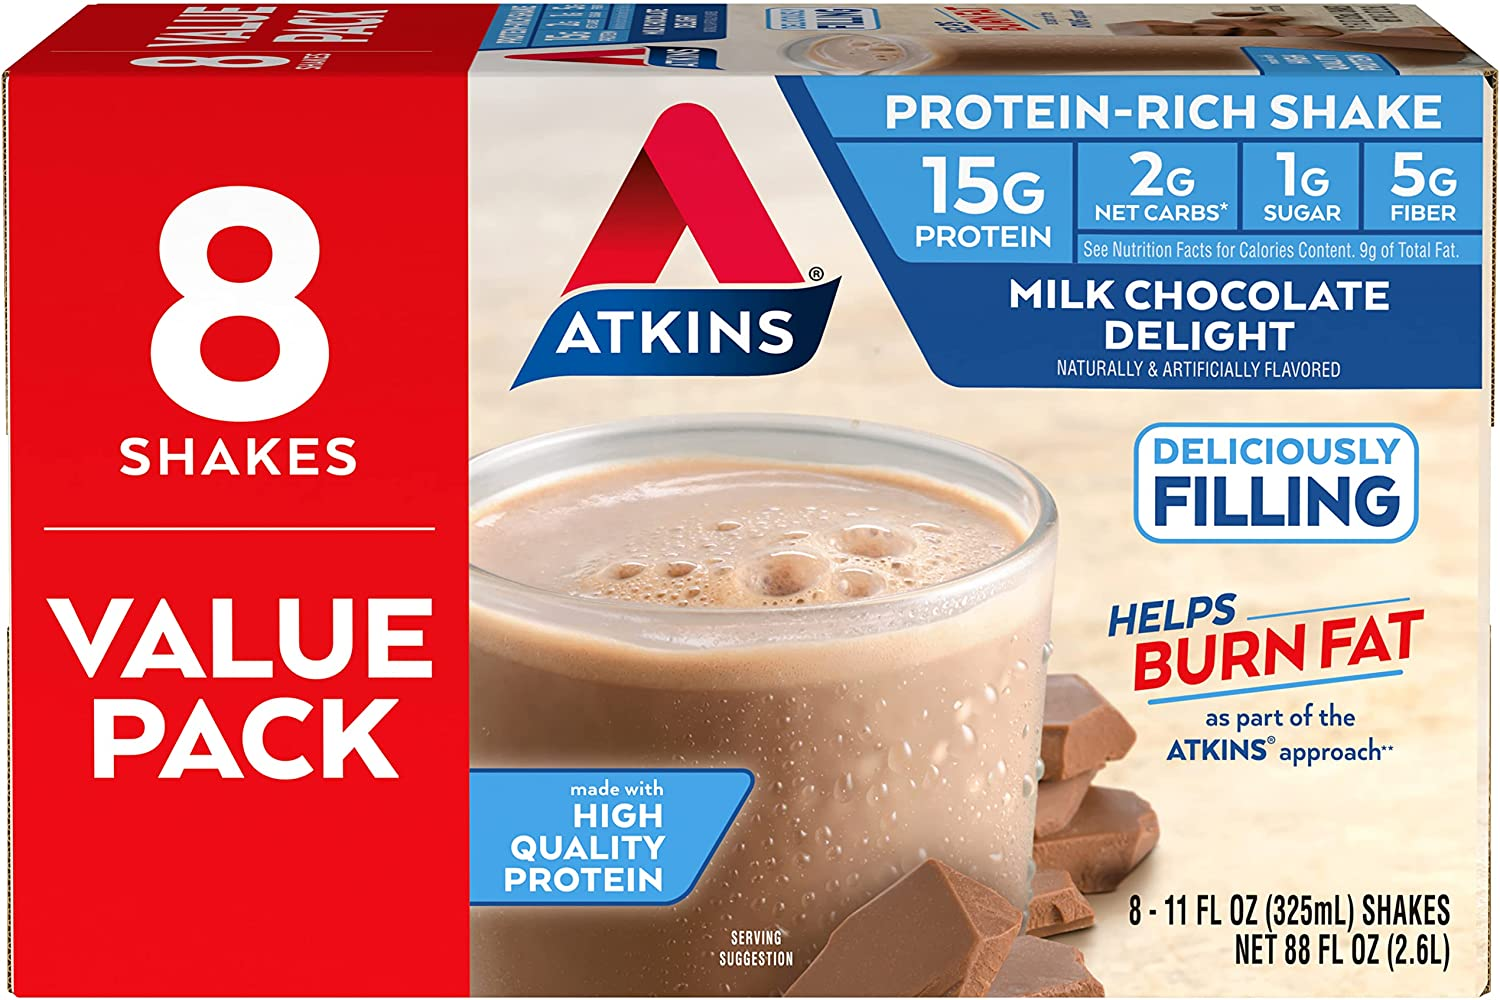 Atkins Gluten Free Protein-Rich Shake, Mocha Latte, Keto Friendly, 15 Count